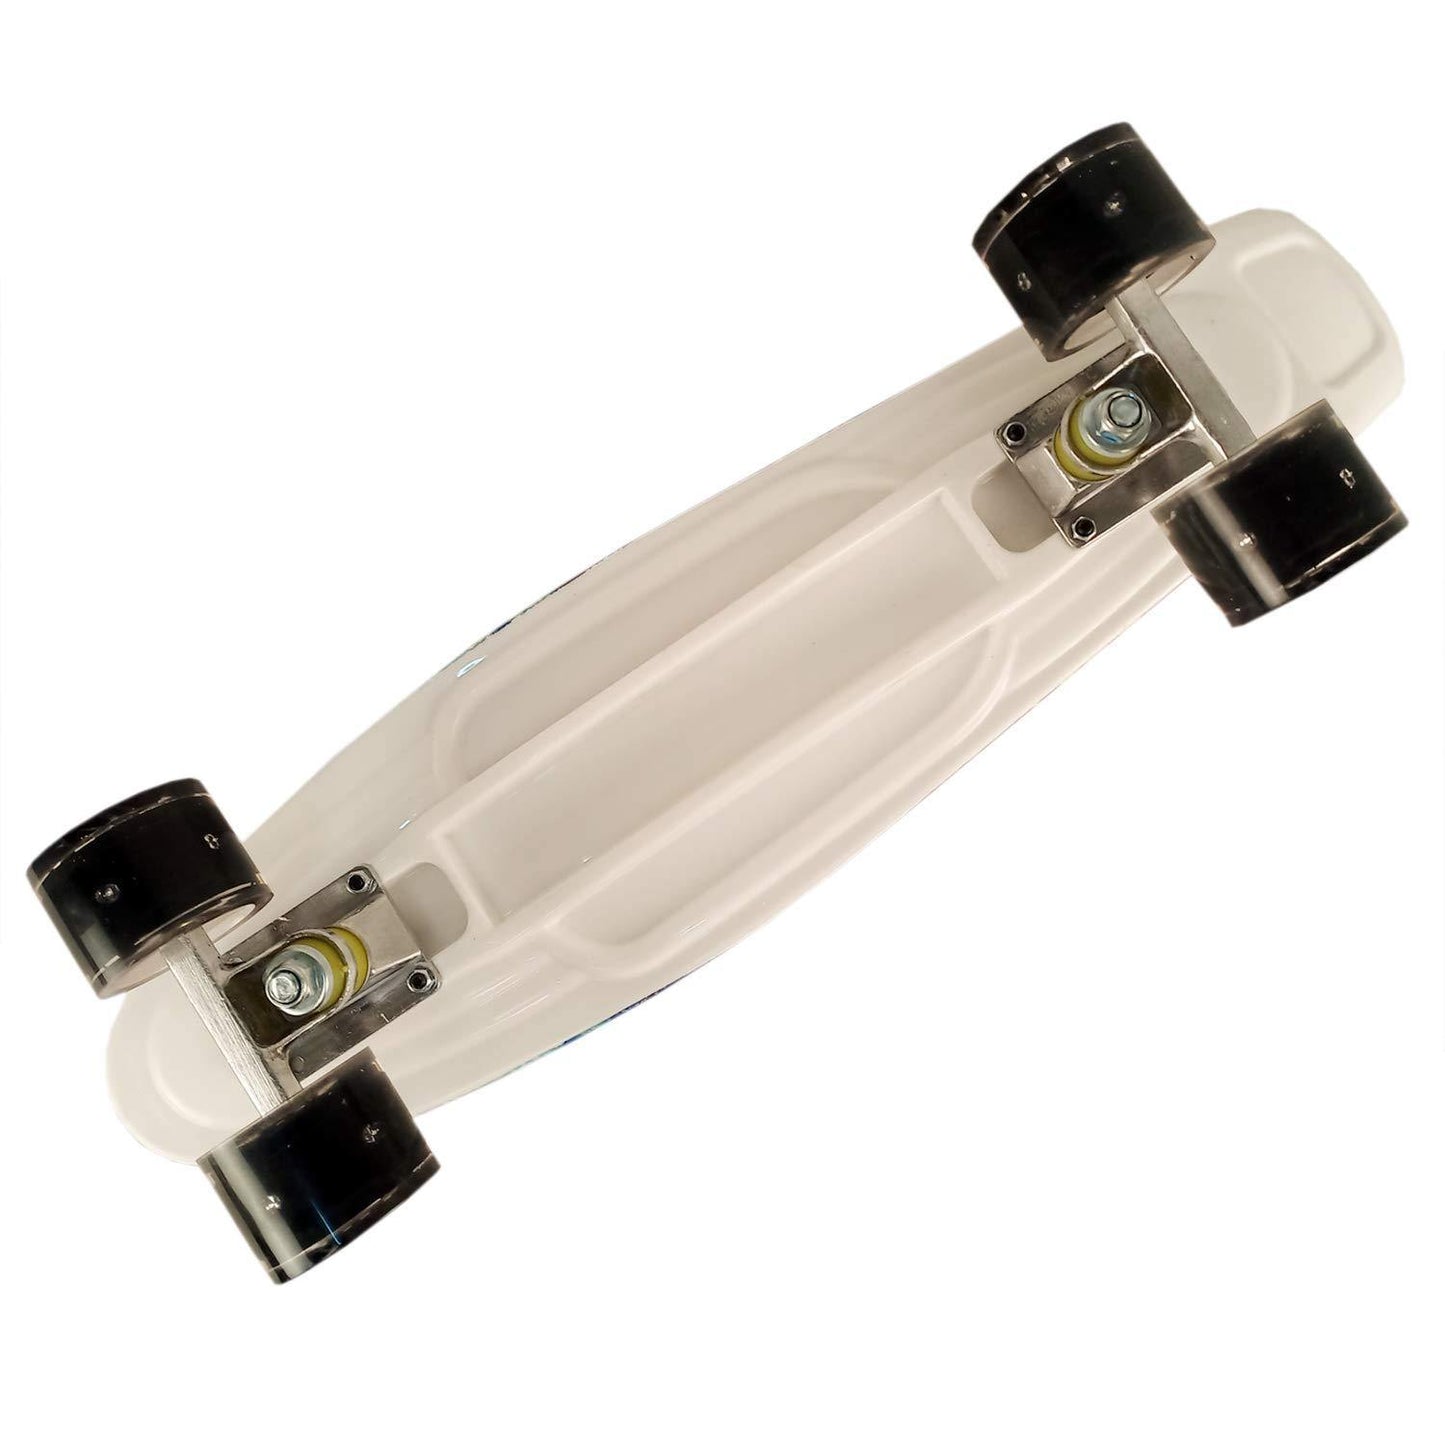 Viva Skateboard with Flashlight Wheels - Junior - Vibrant Color (22 x 6 Inches) - Best Price online Prokicksports.com